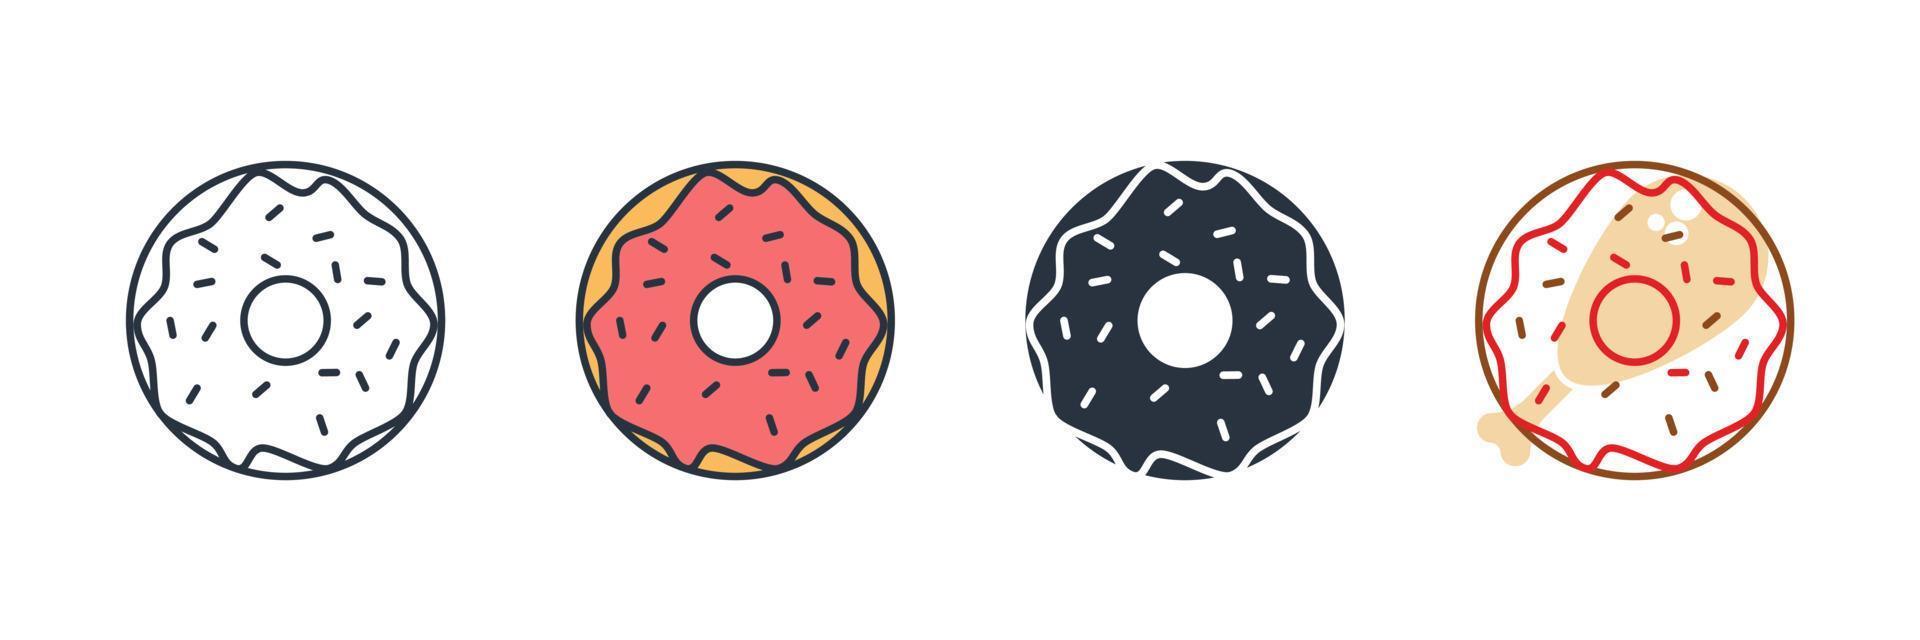 Donut-Symbol-Logo-Vektor-Illustration. Donut-Food-Symbolvorlage für Grafik- und Webdesign-Sammlung vektor